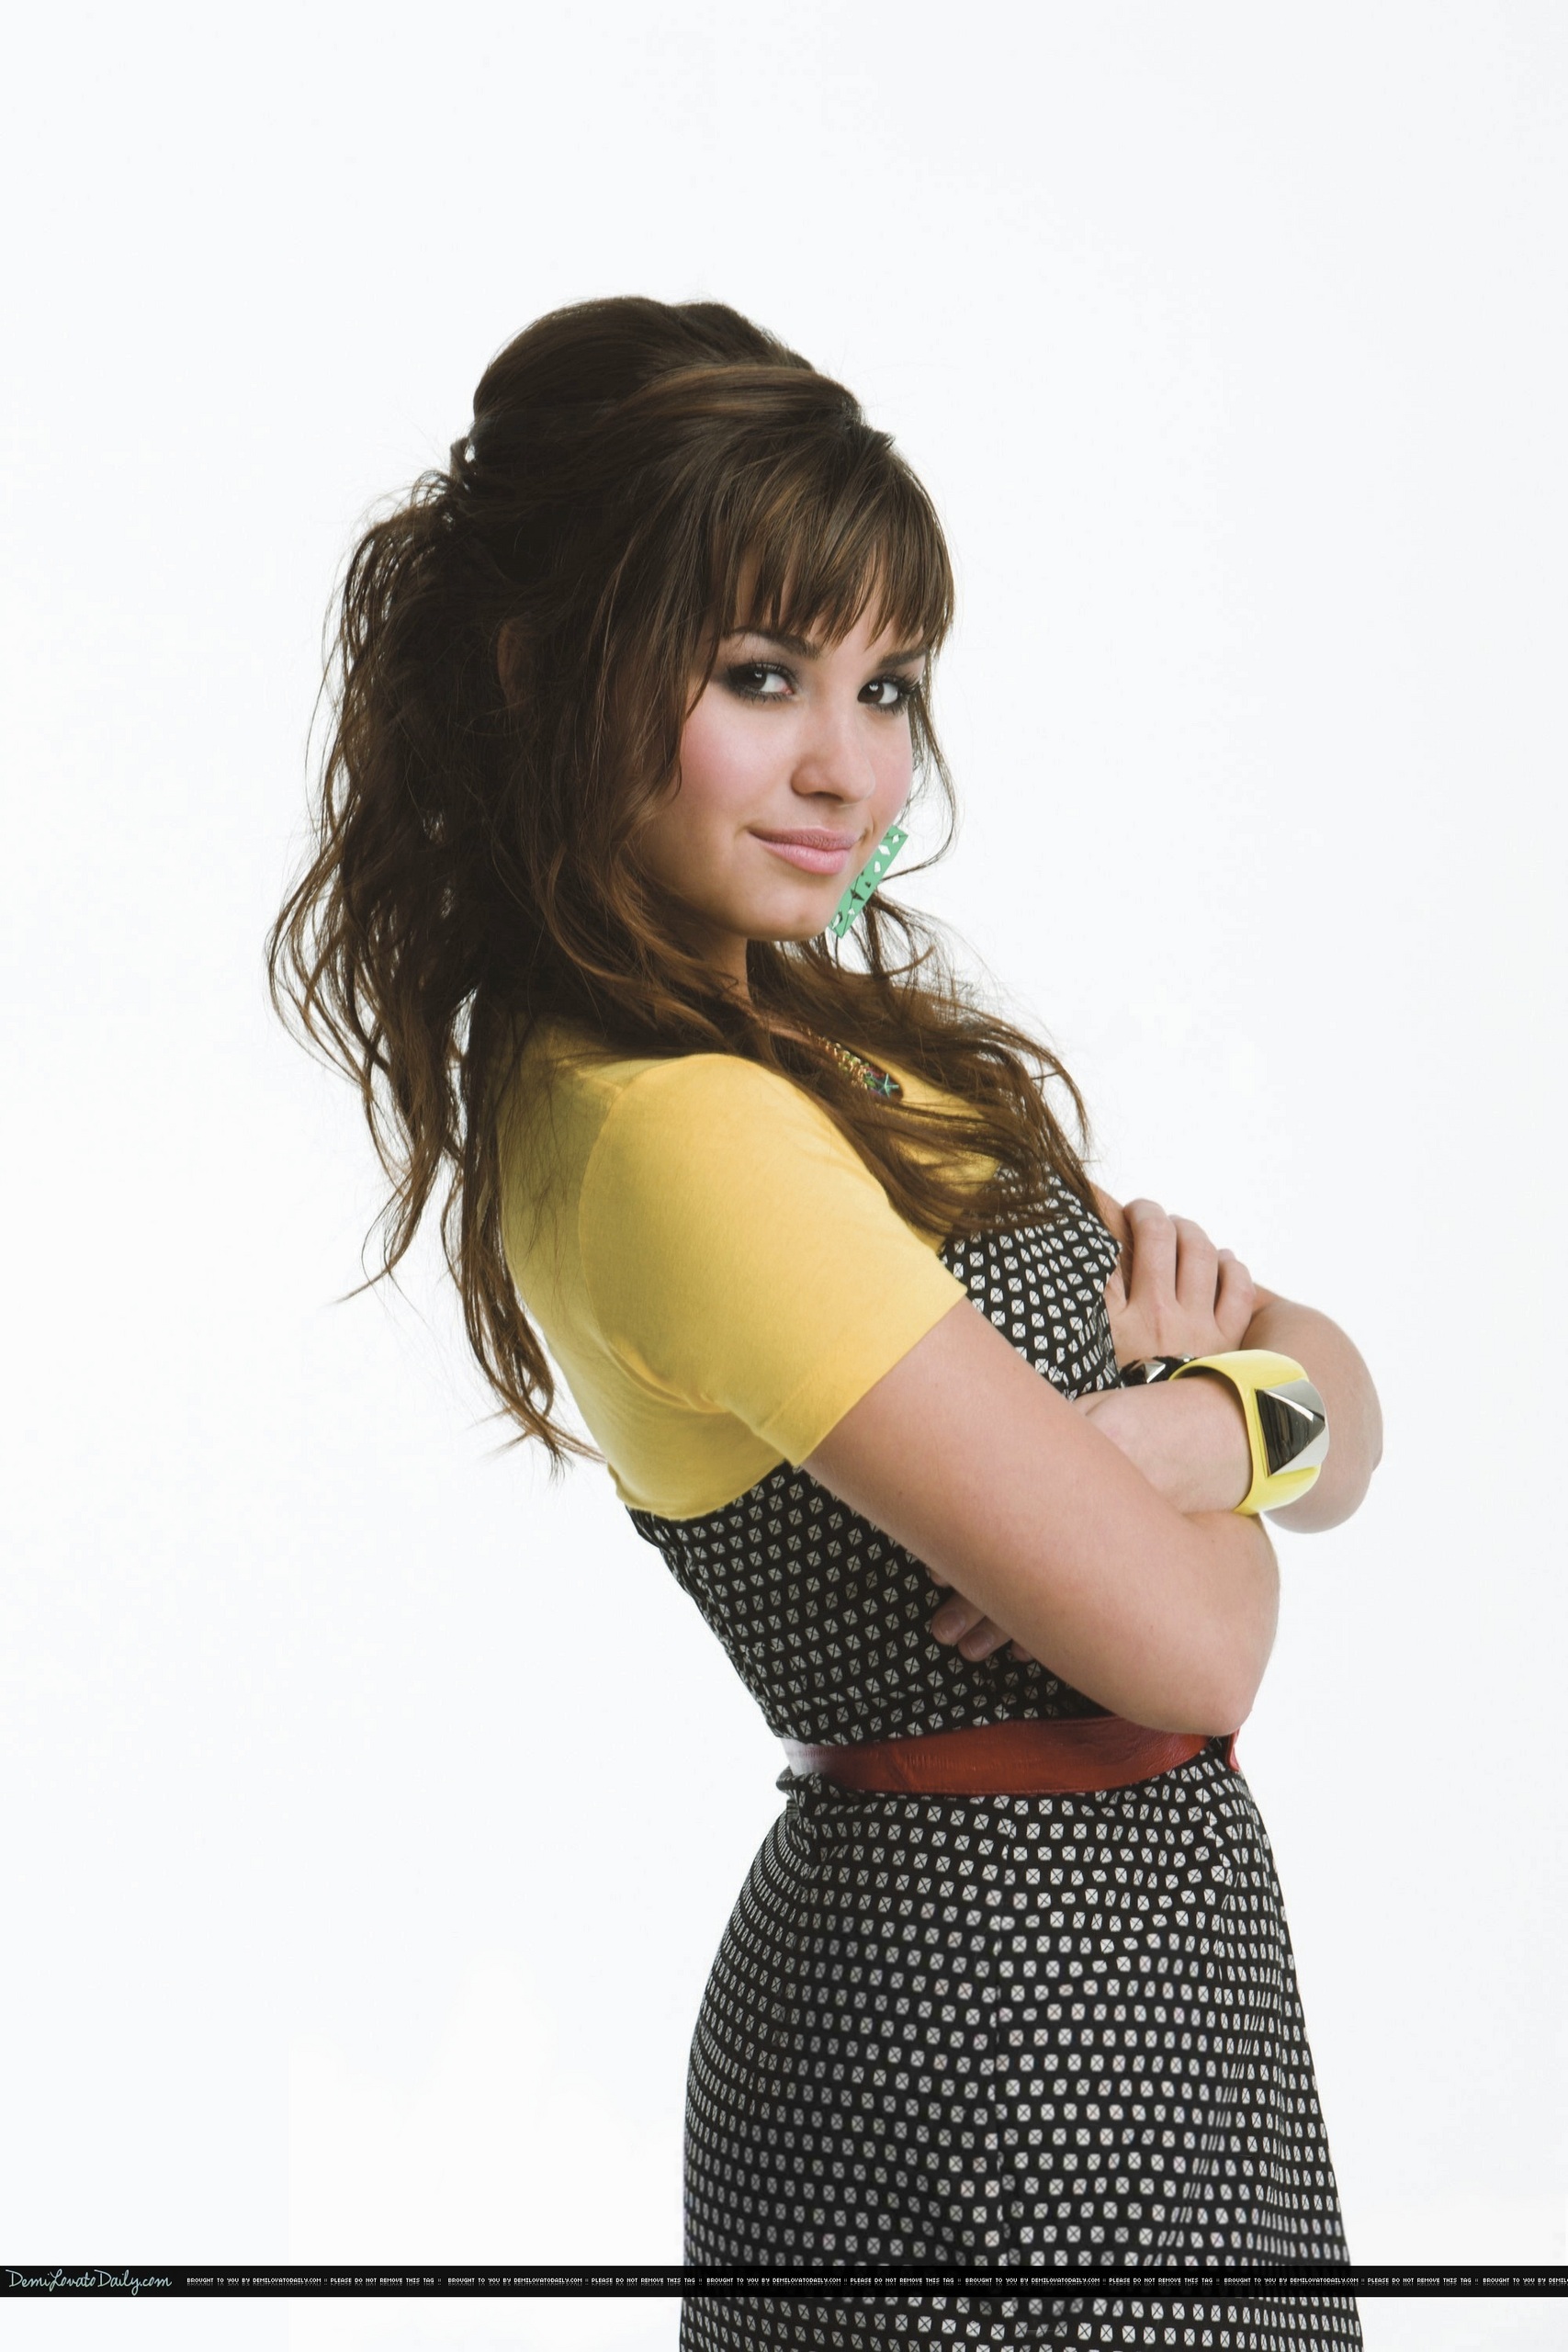 Demi Lovato - J Buzzerio 2008 photoshoot - Anichu90 Photo (16783106) - Fanpop1707 x 2560